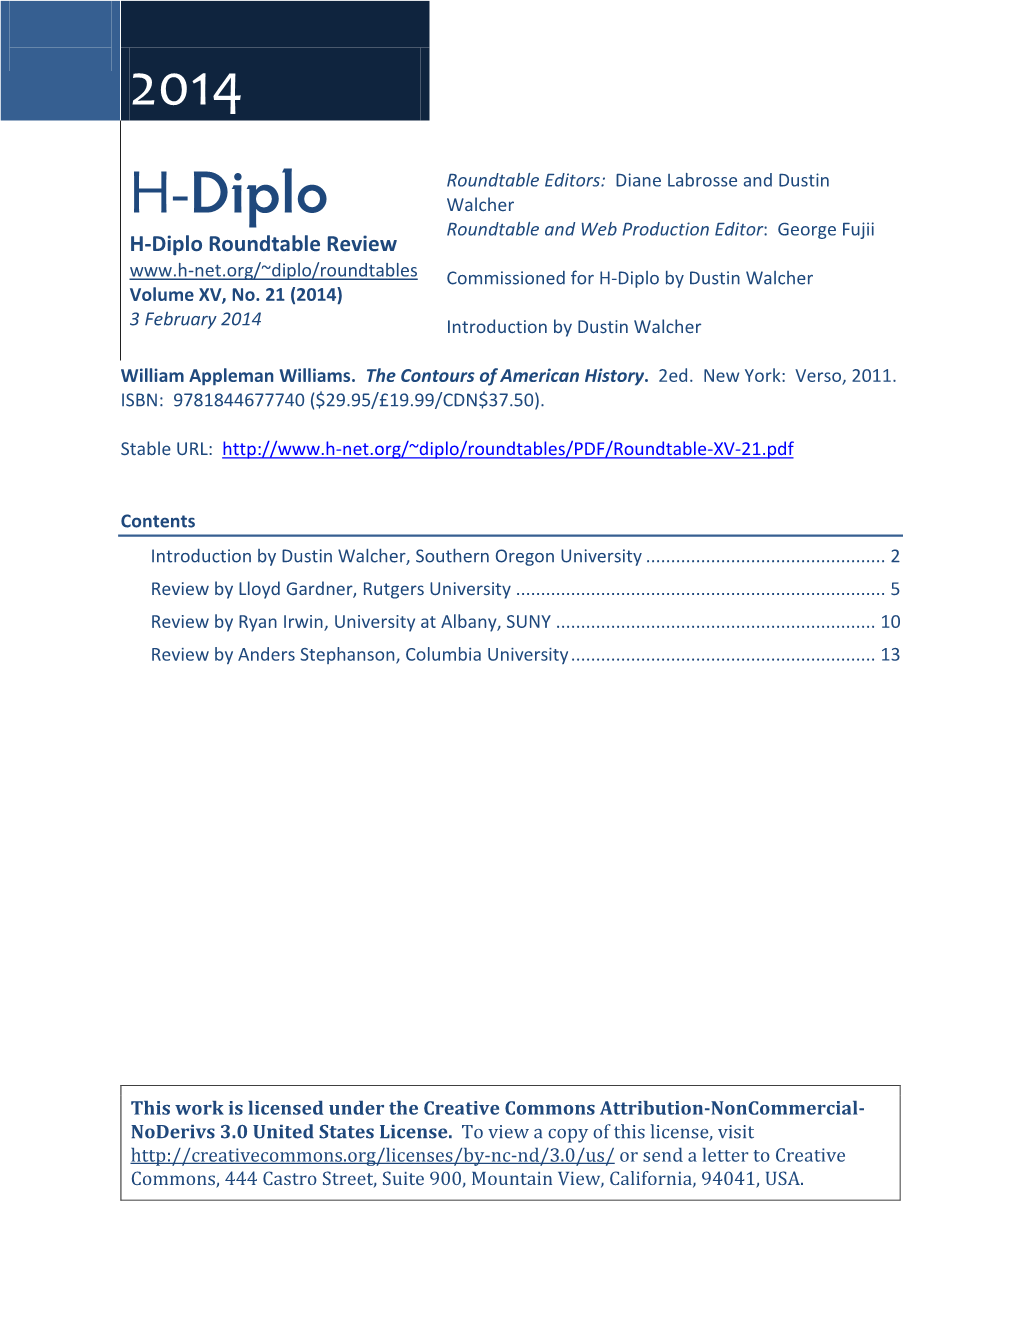 H-Diplo Roundtable, Vol. XV, No. 21